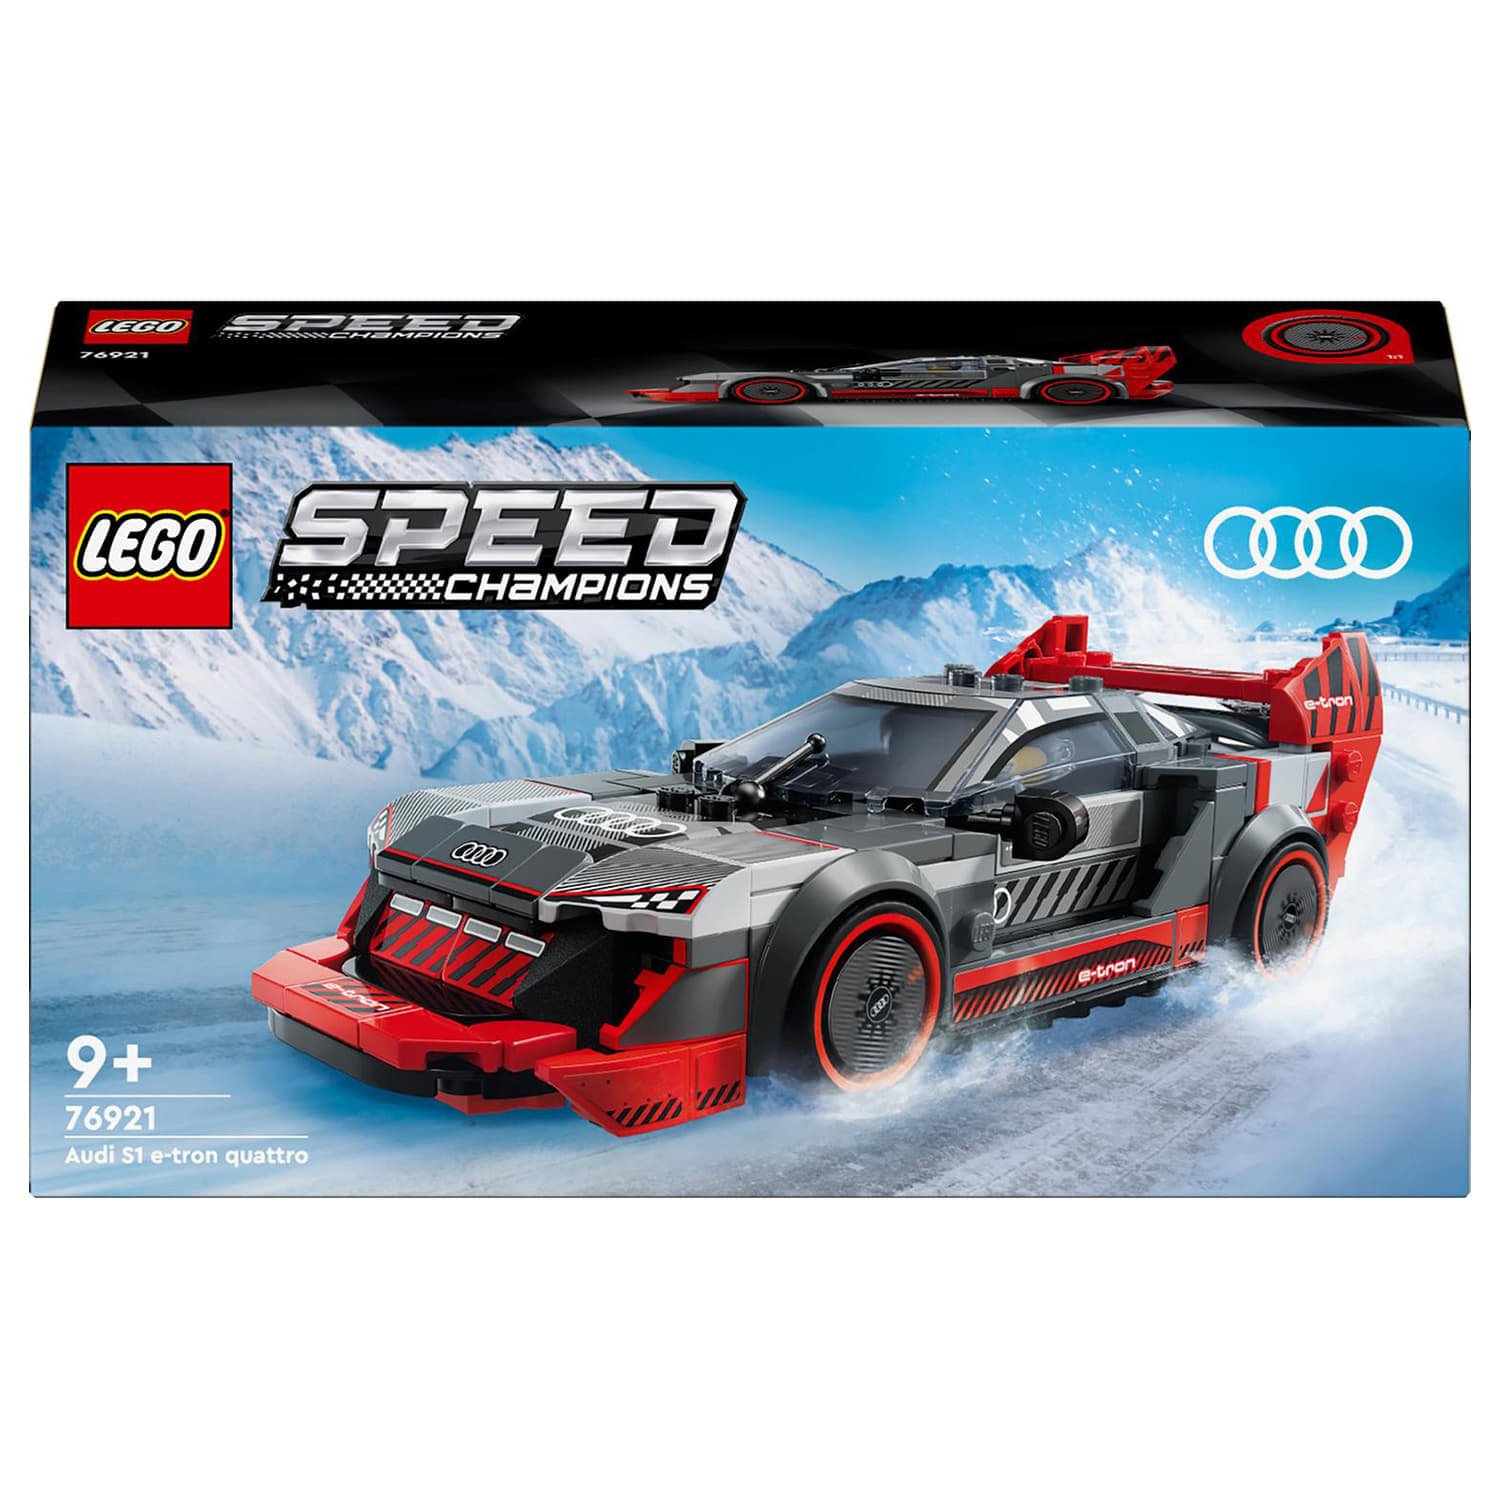 Speed Champions 76921 Audi S1 e-tron quattro Race Car